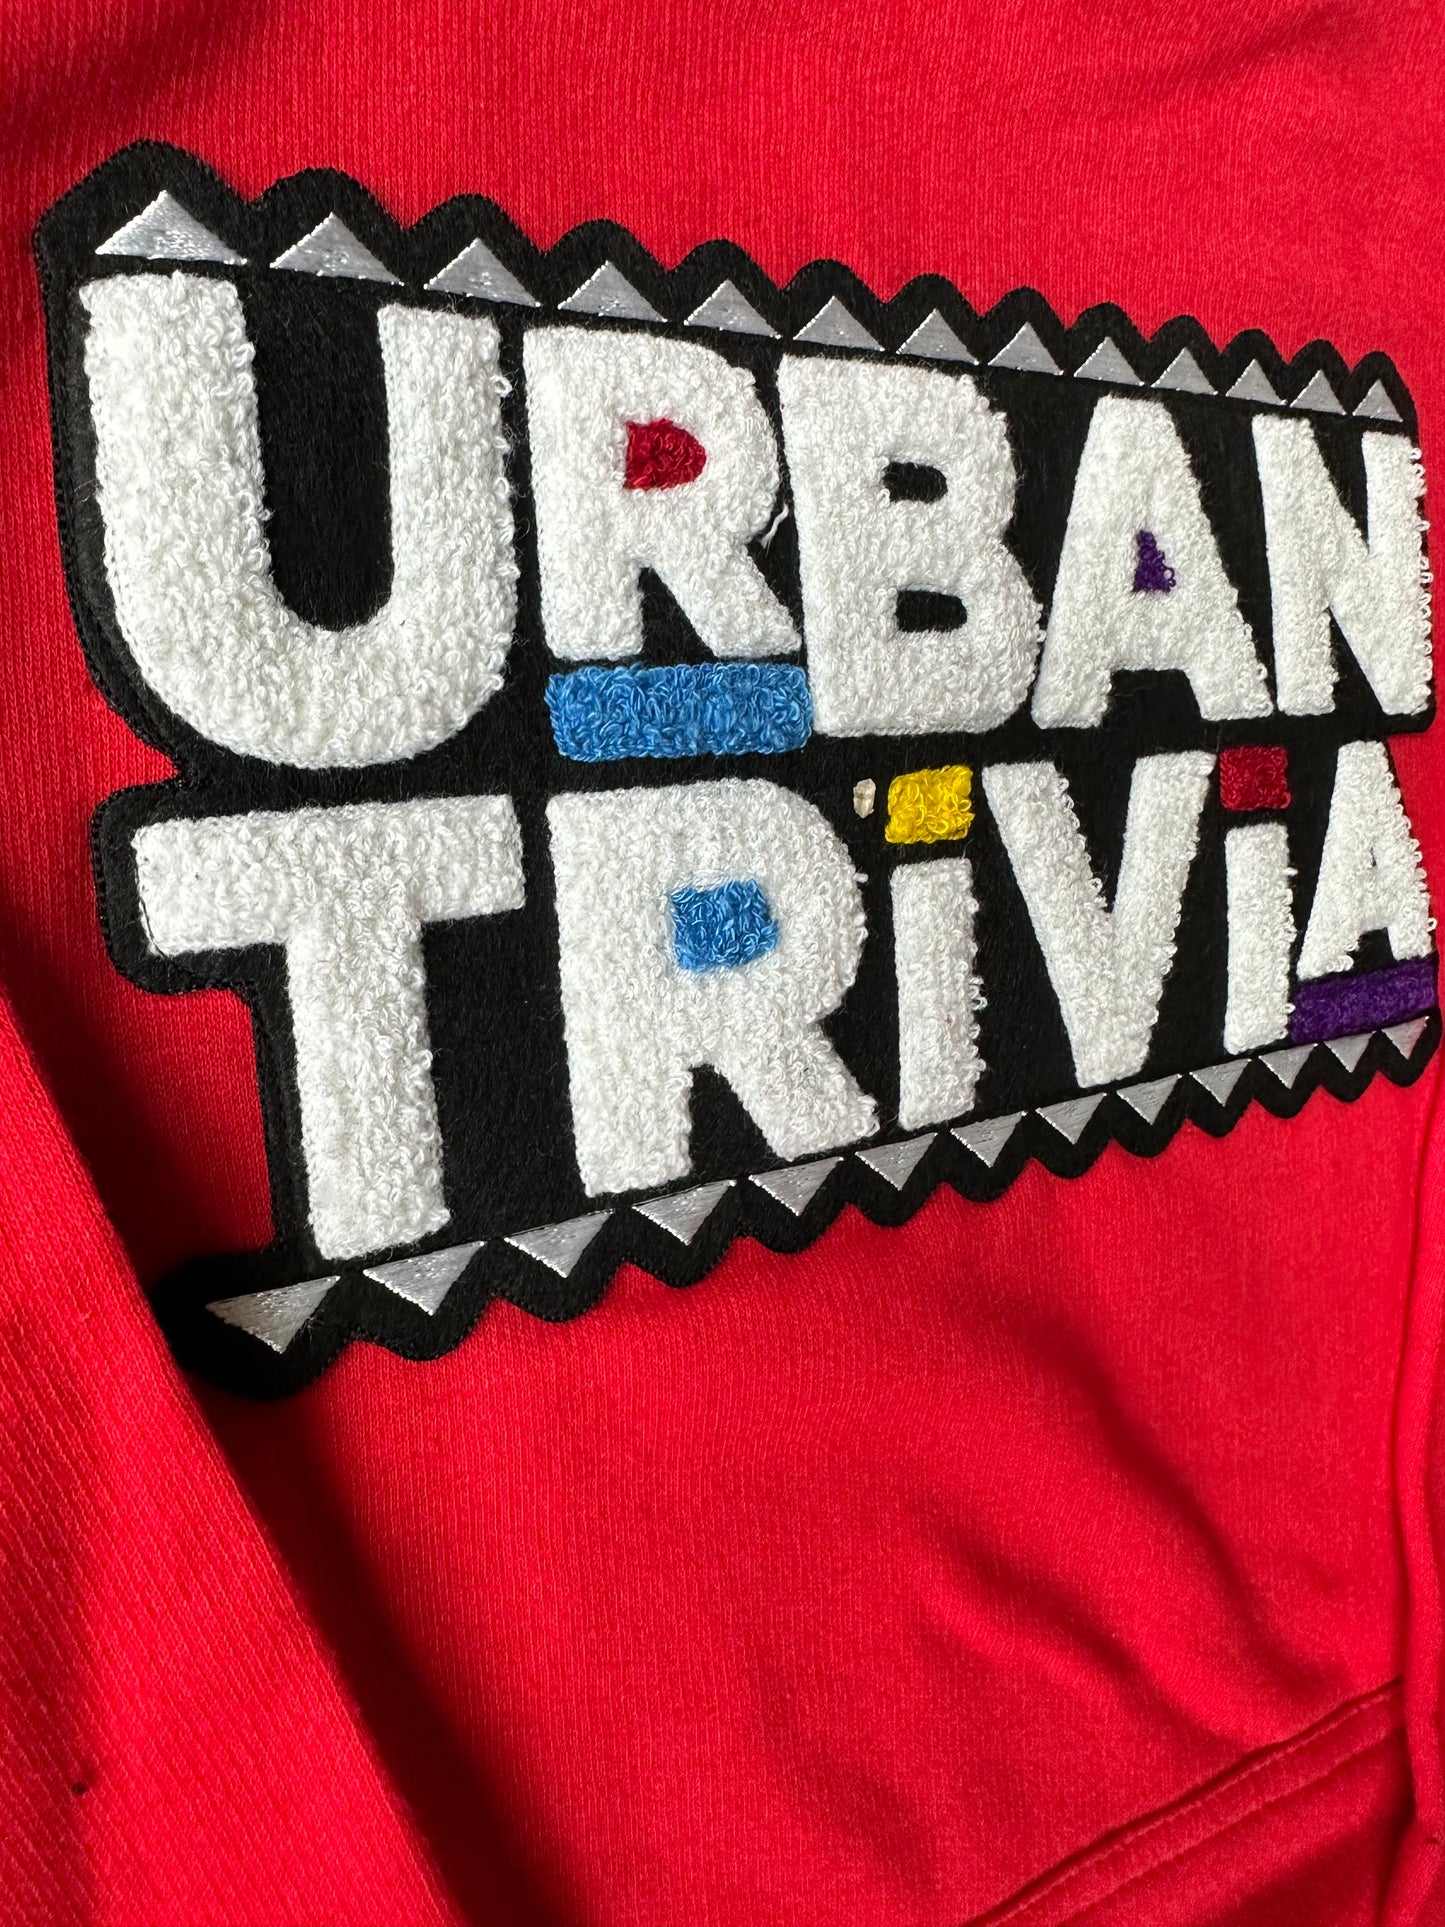 Urban Trivia Big Logo Hoodie - Red